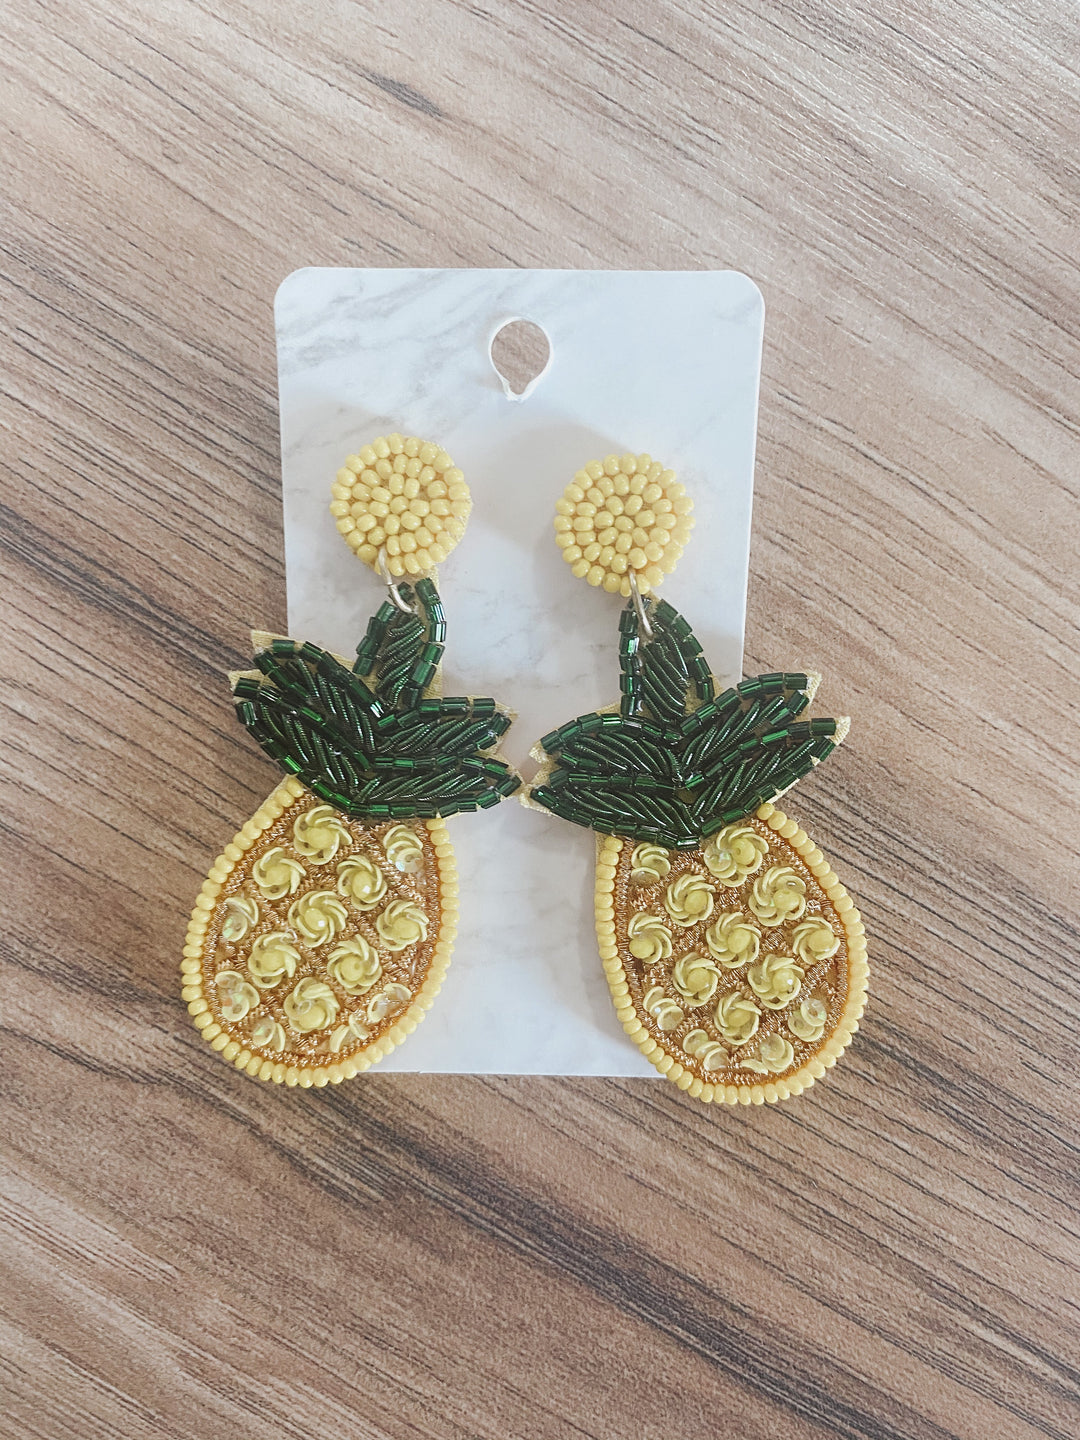 Flower Pineapple Earrings - Jayden Layne